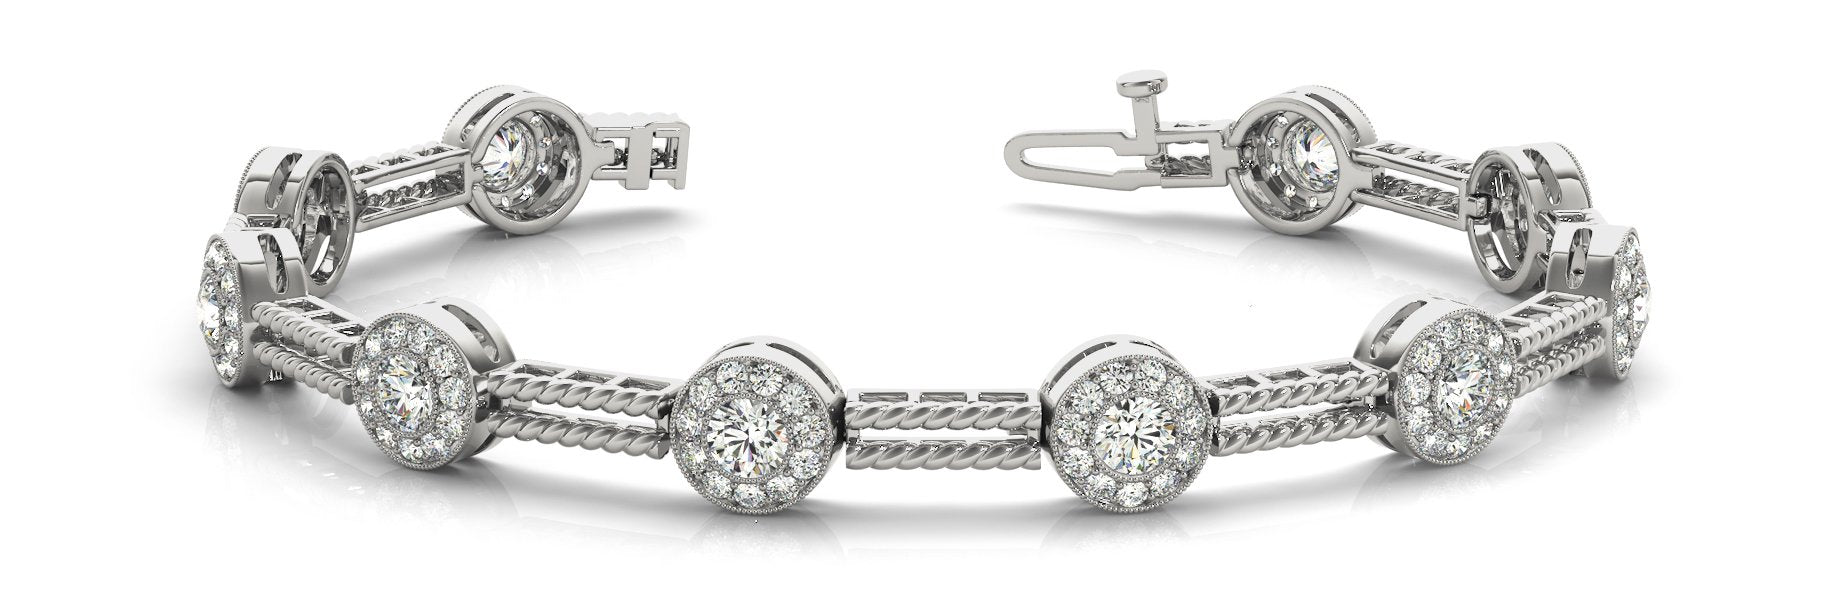 Fancy Diamond Bracelet Ladies 2.67ct tw - 14kt White Gold